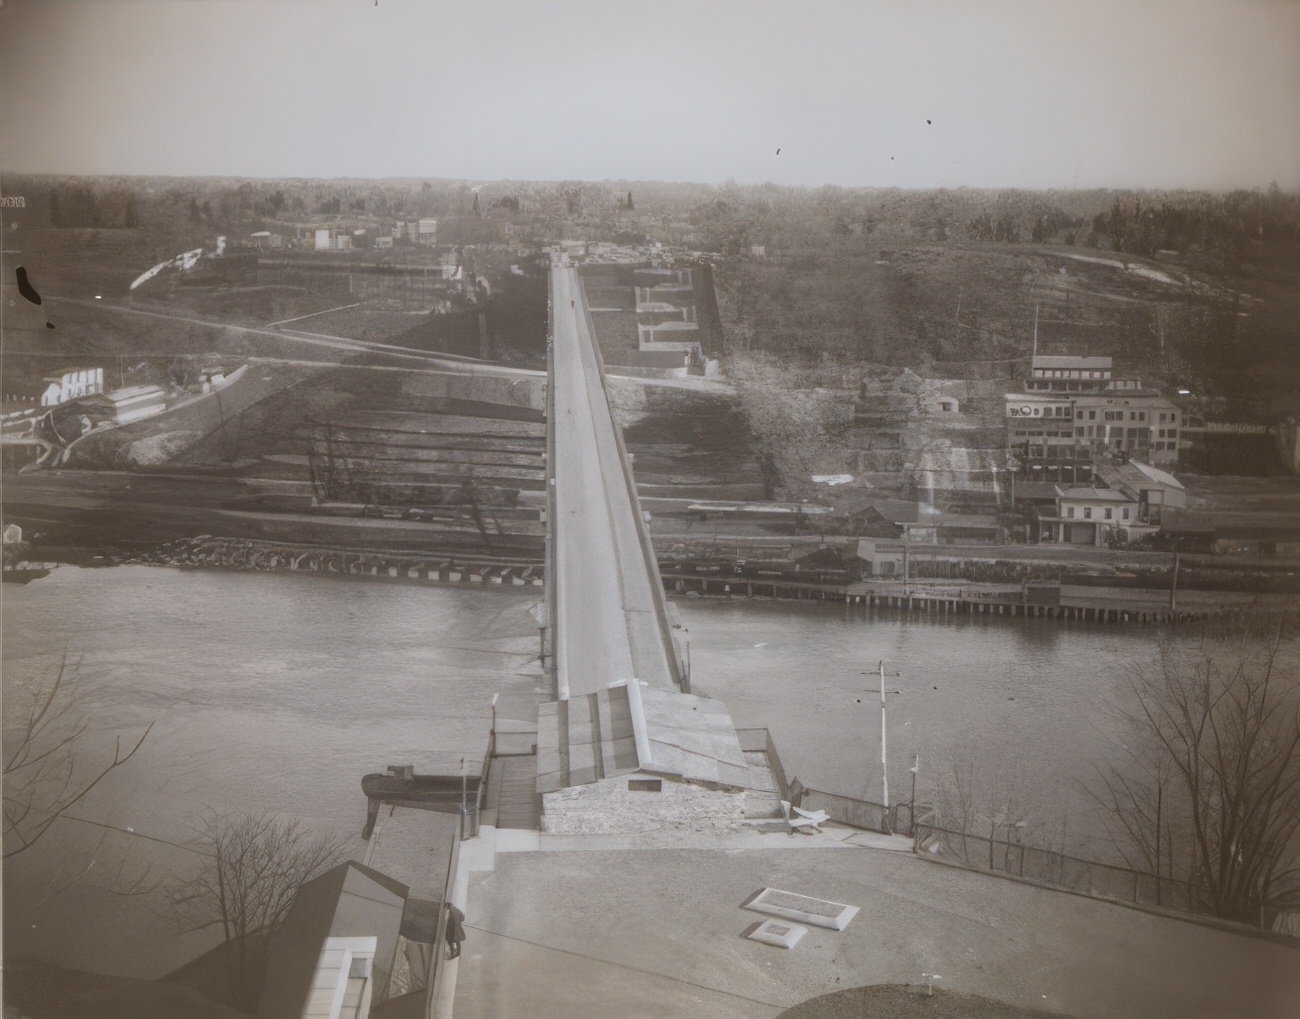 Looking Down On High Bridge, Circa 1910.